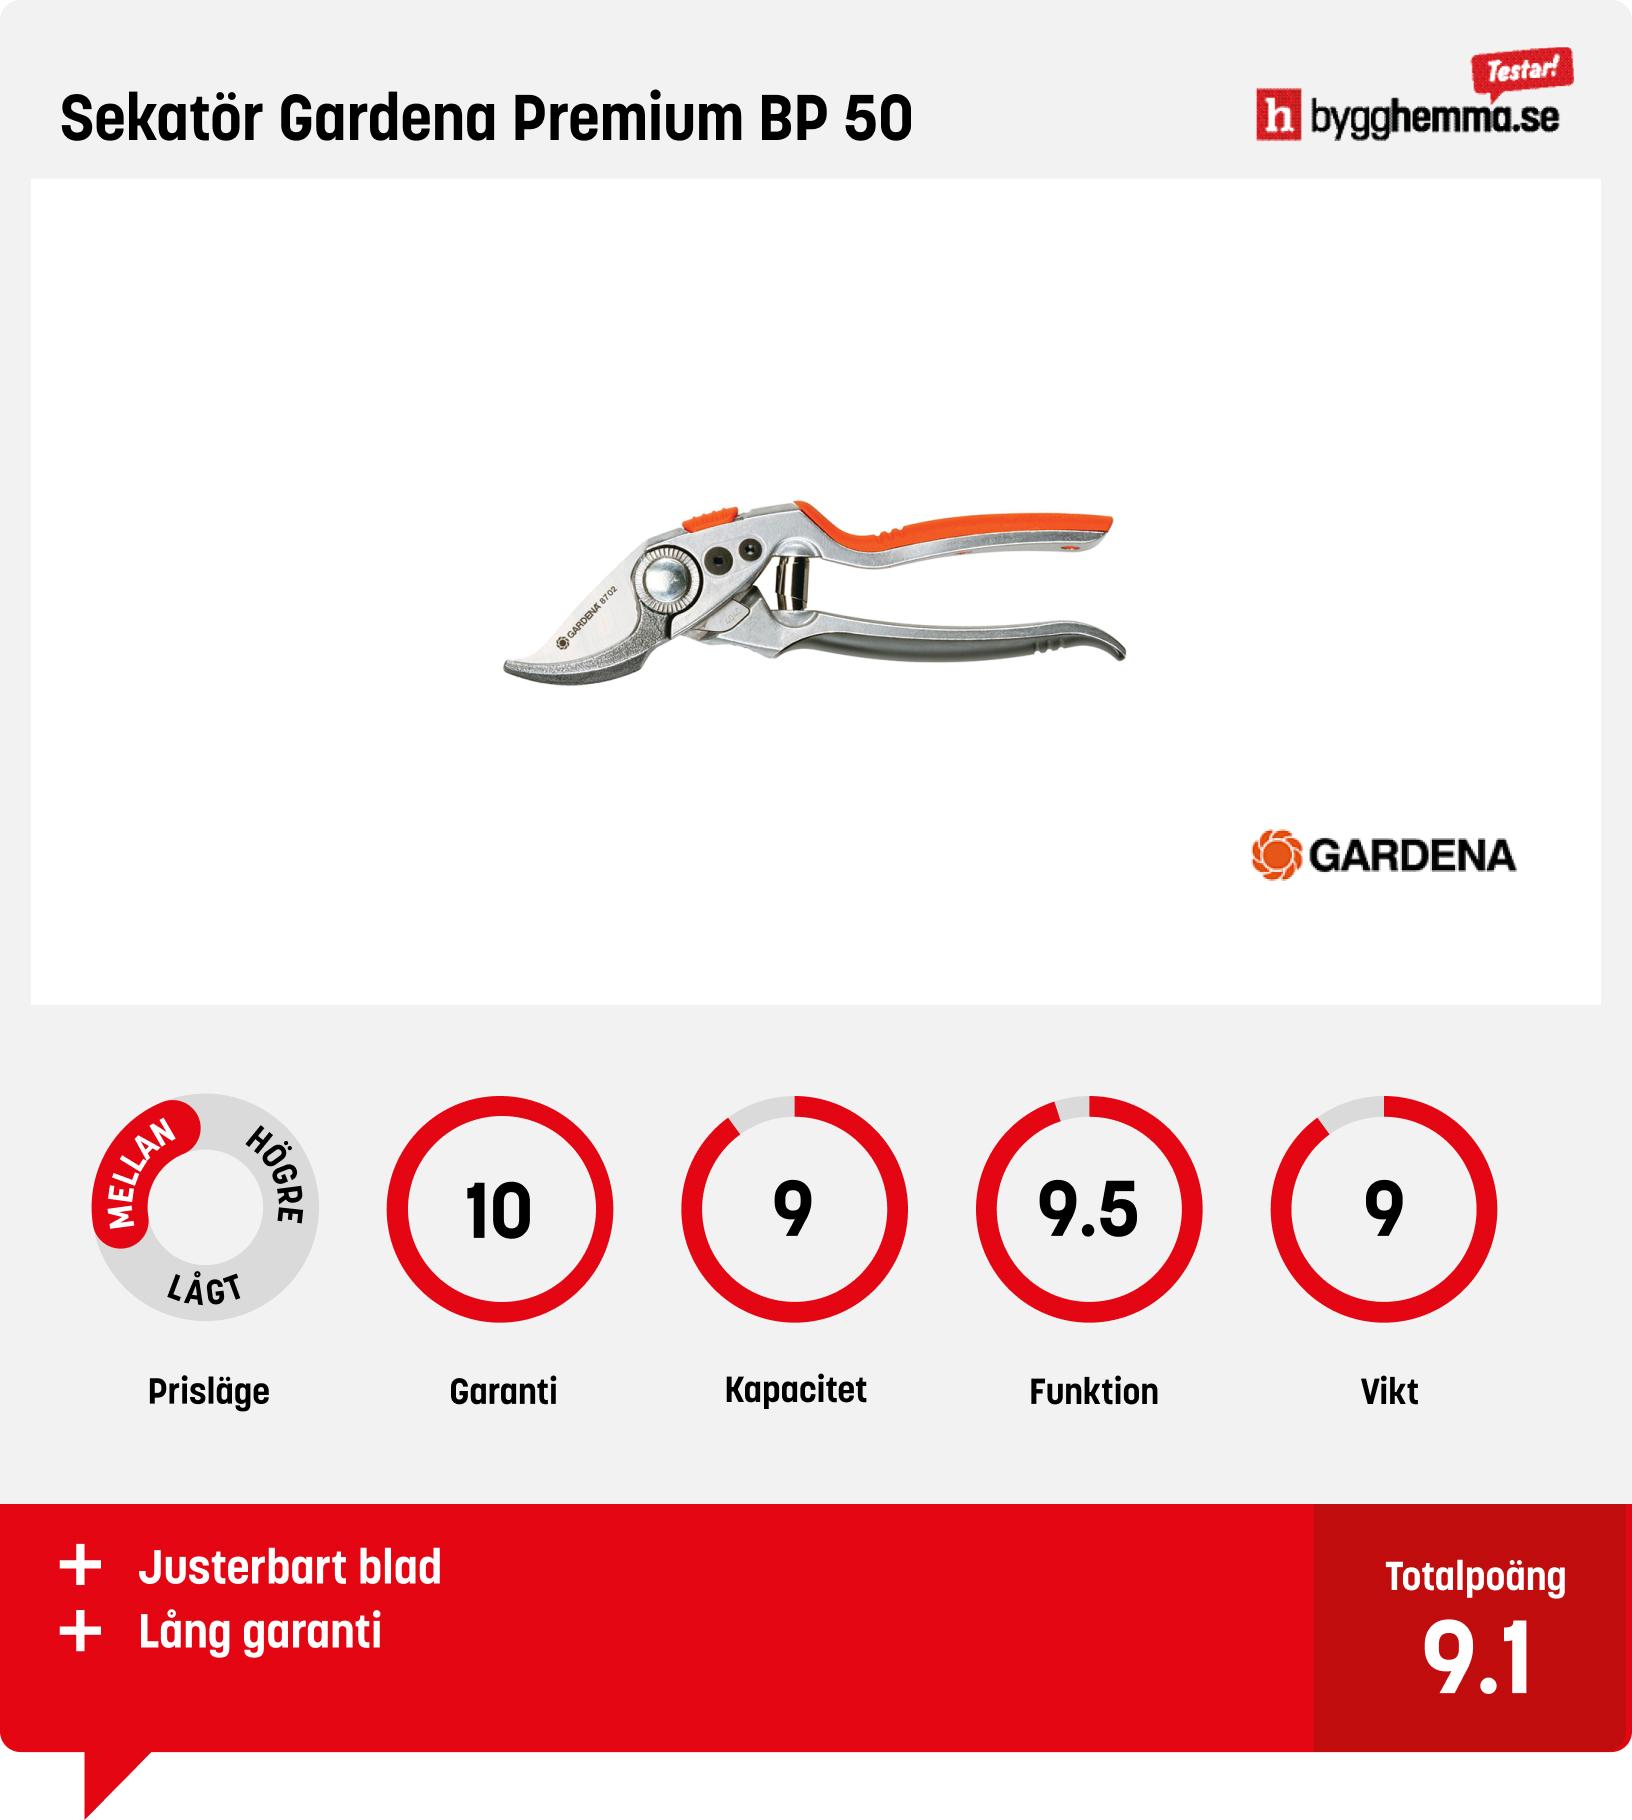 Sekatör bäst i test - Sekatör Gardena Premium BP 50